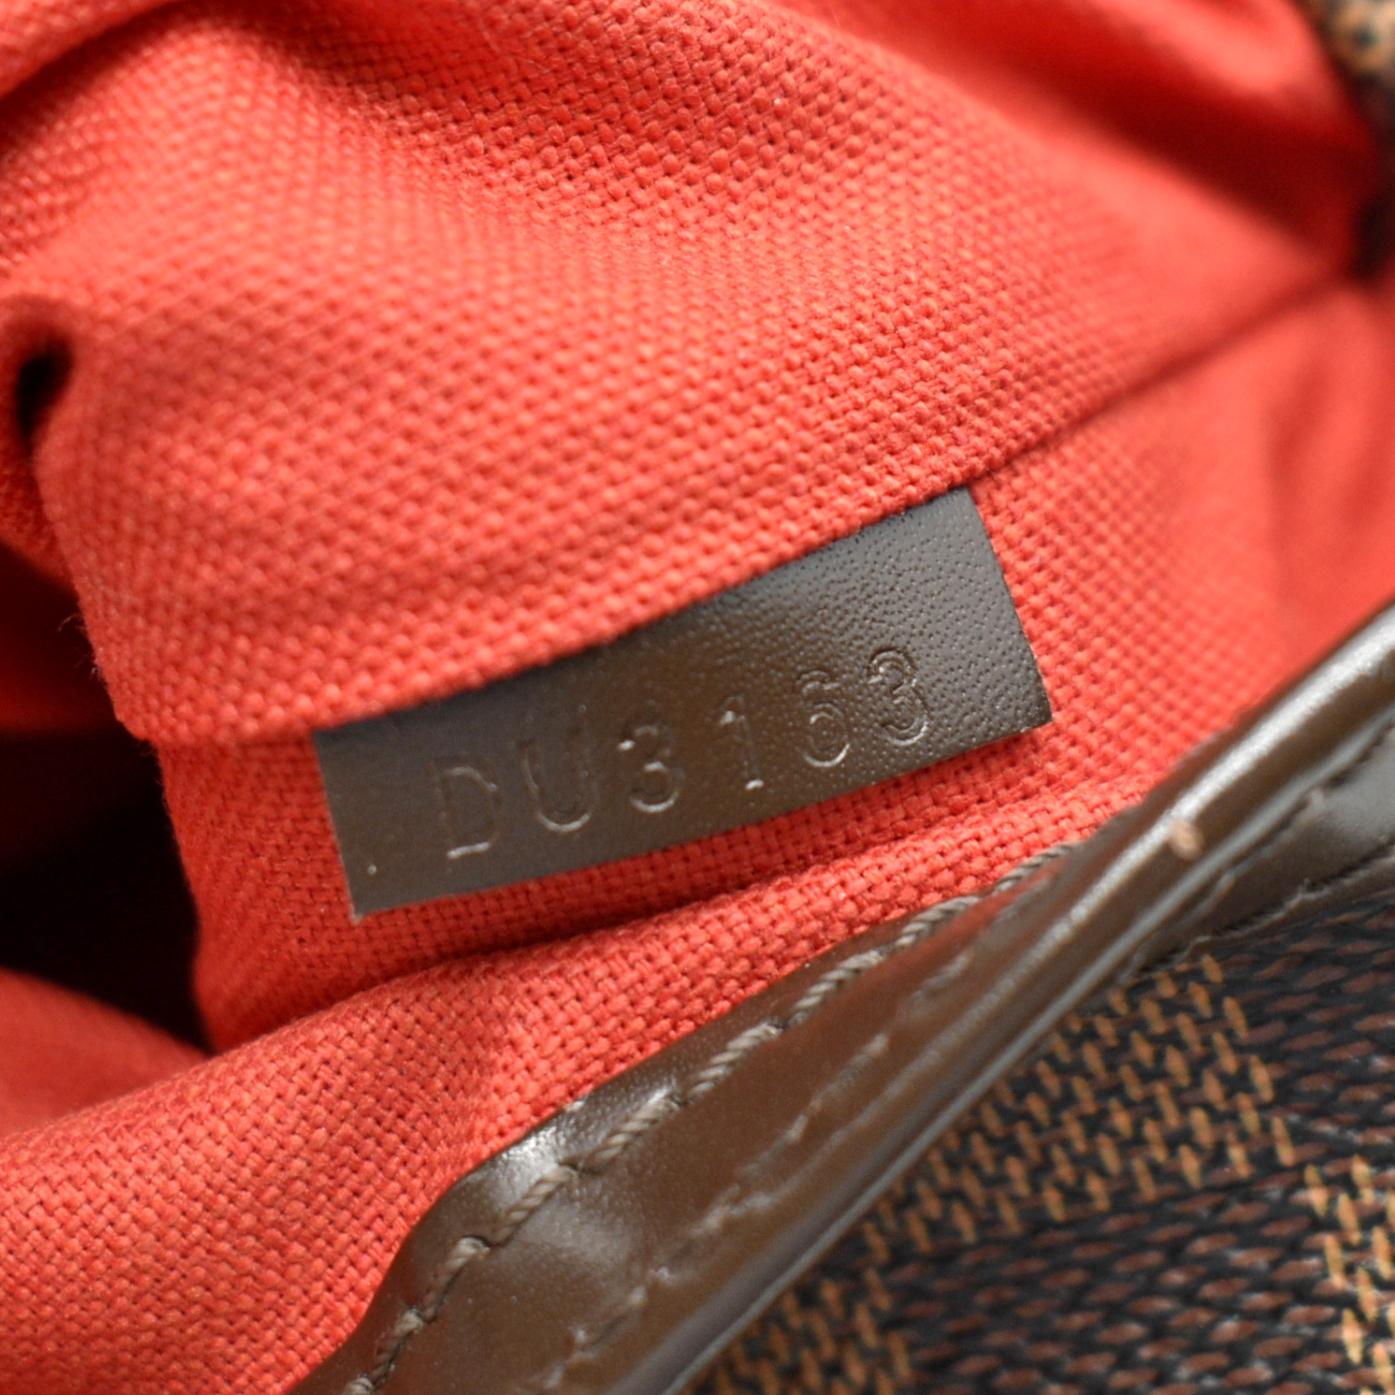 Bloomsbury cloth crossbody bag Louis Vuitton Brown in Cloth - 31830843